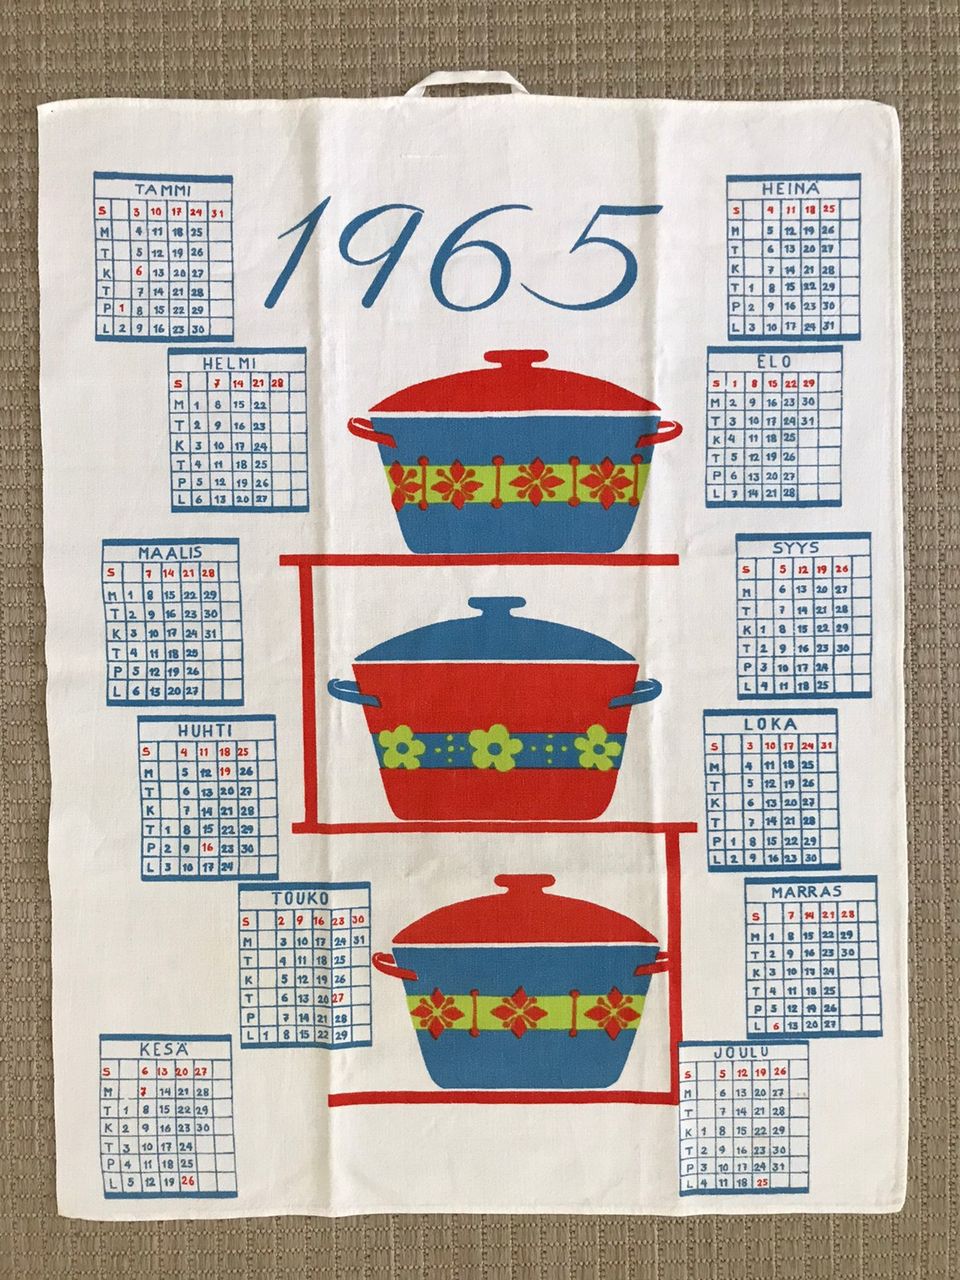 vuoden 1965 kalenteripyyhe